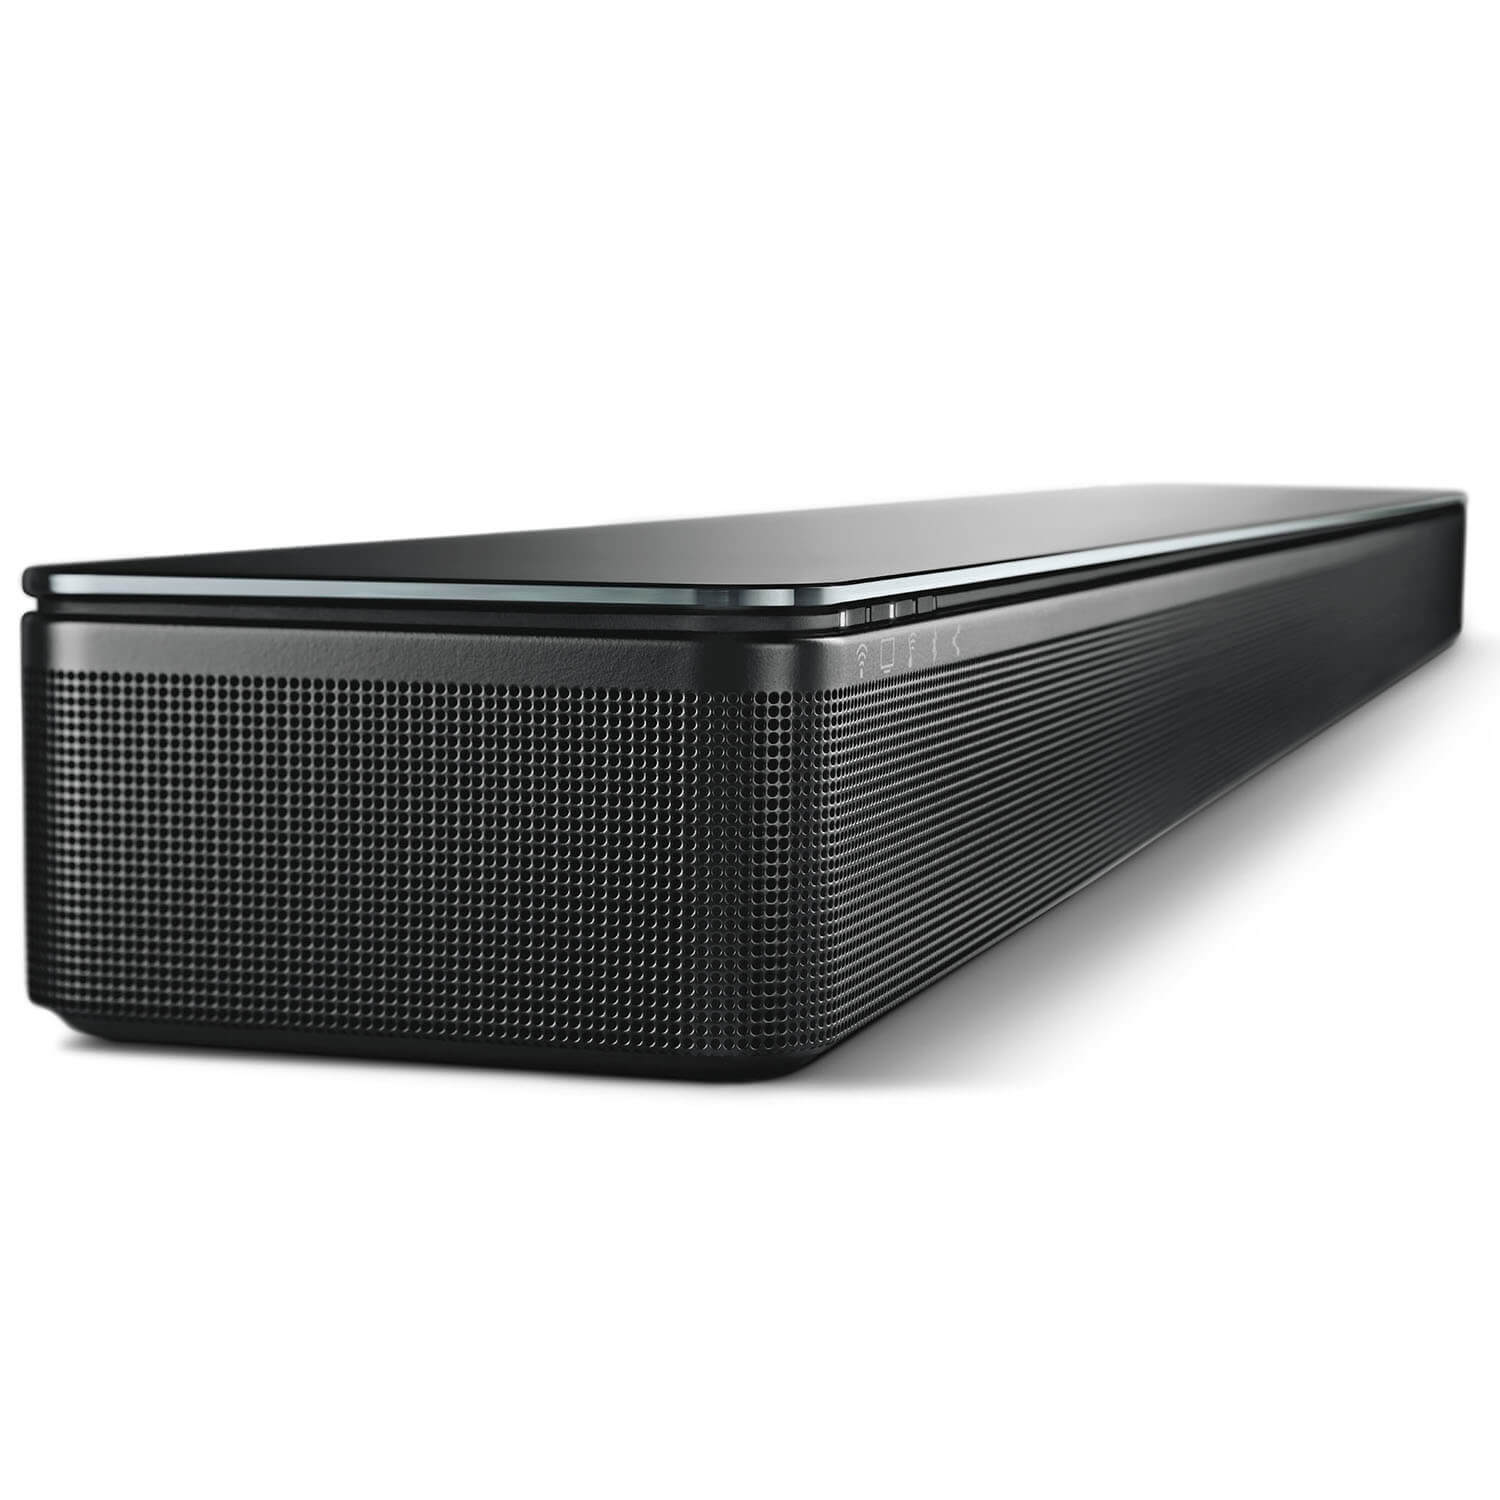 Bose SoundTouch 300 Soundbar Review: Better Than Sonos?